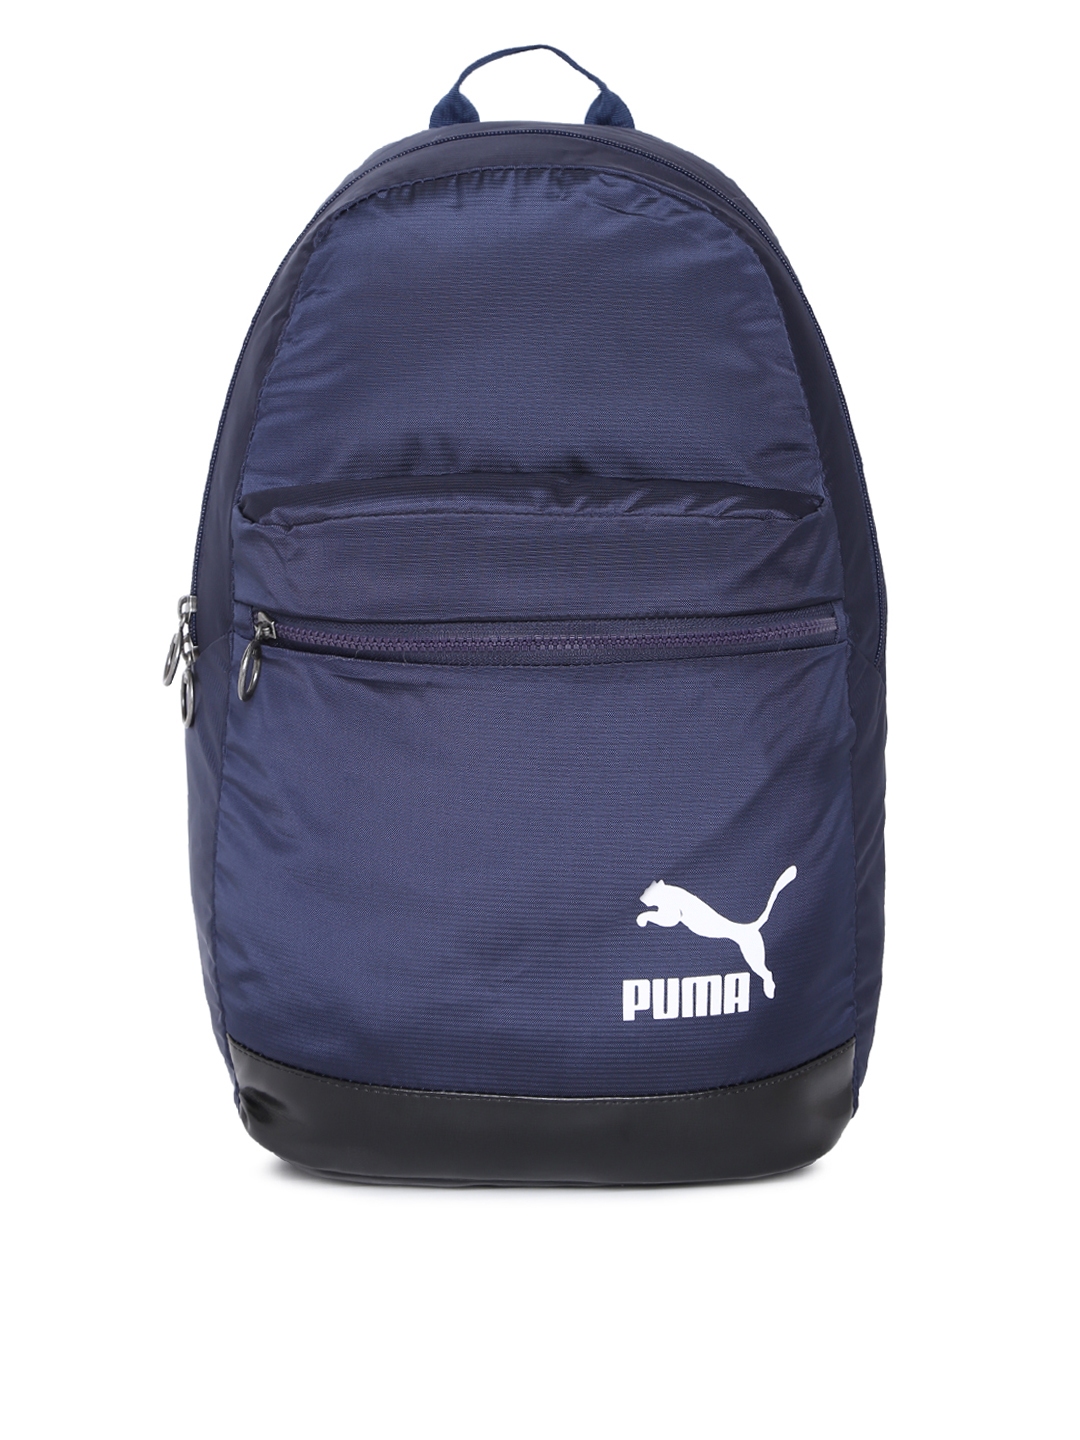 puma unisex blue backpack